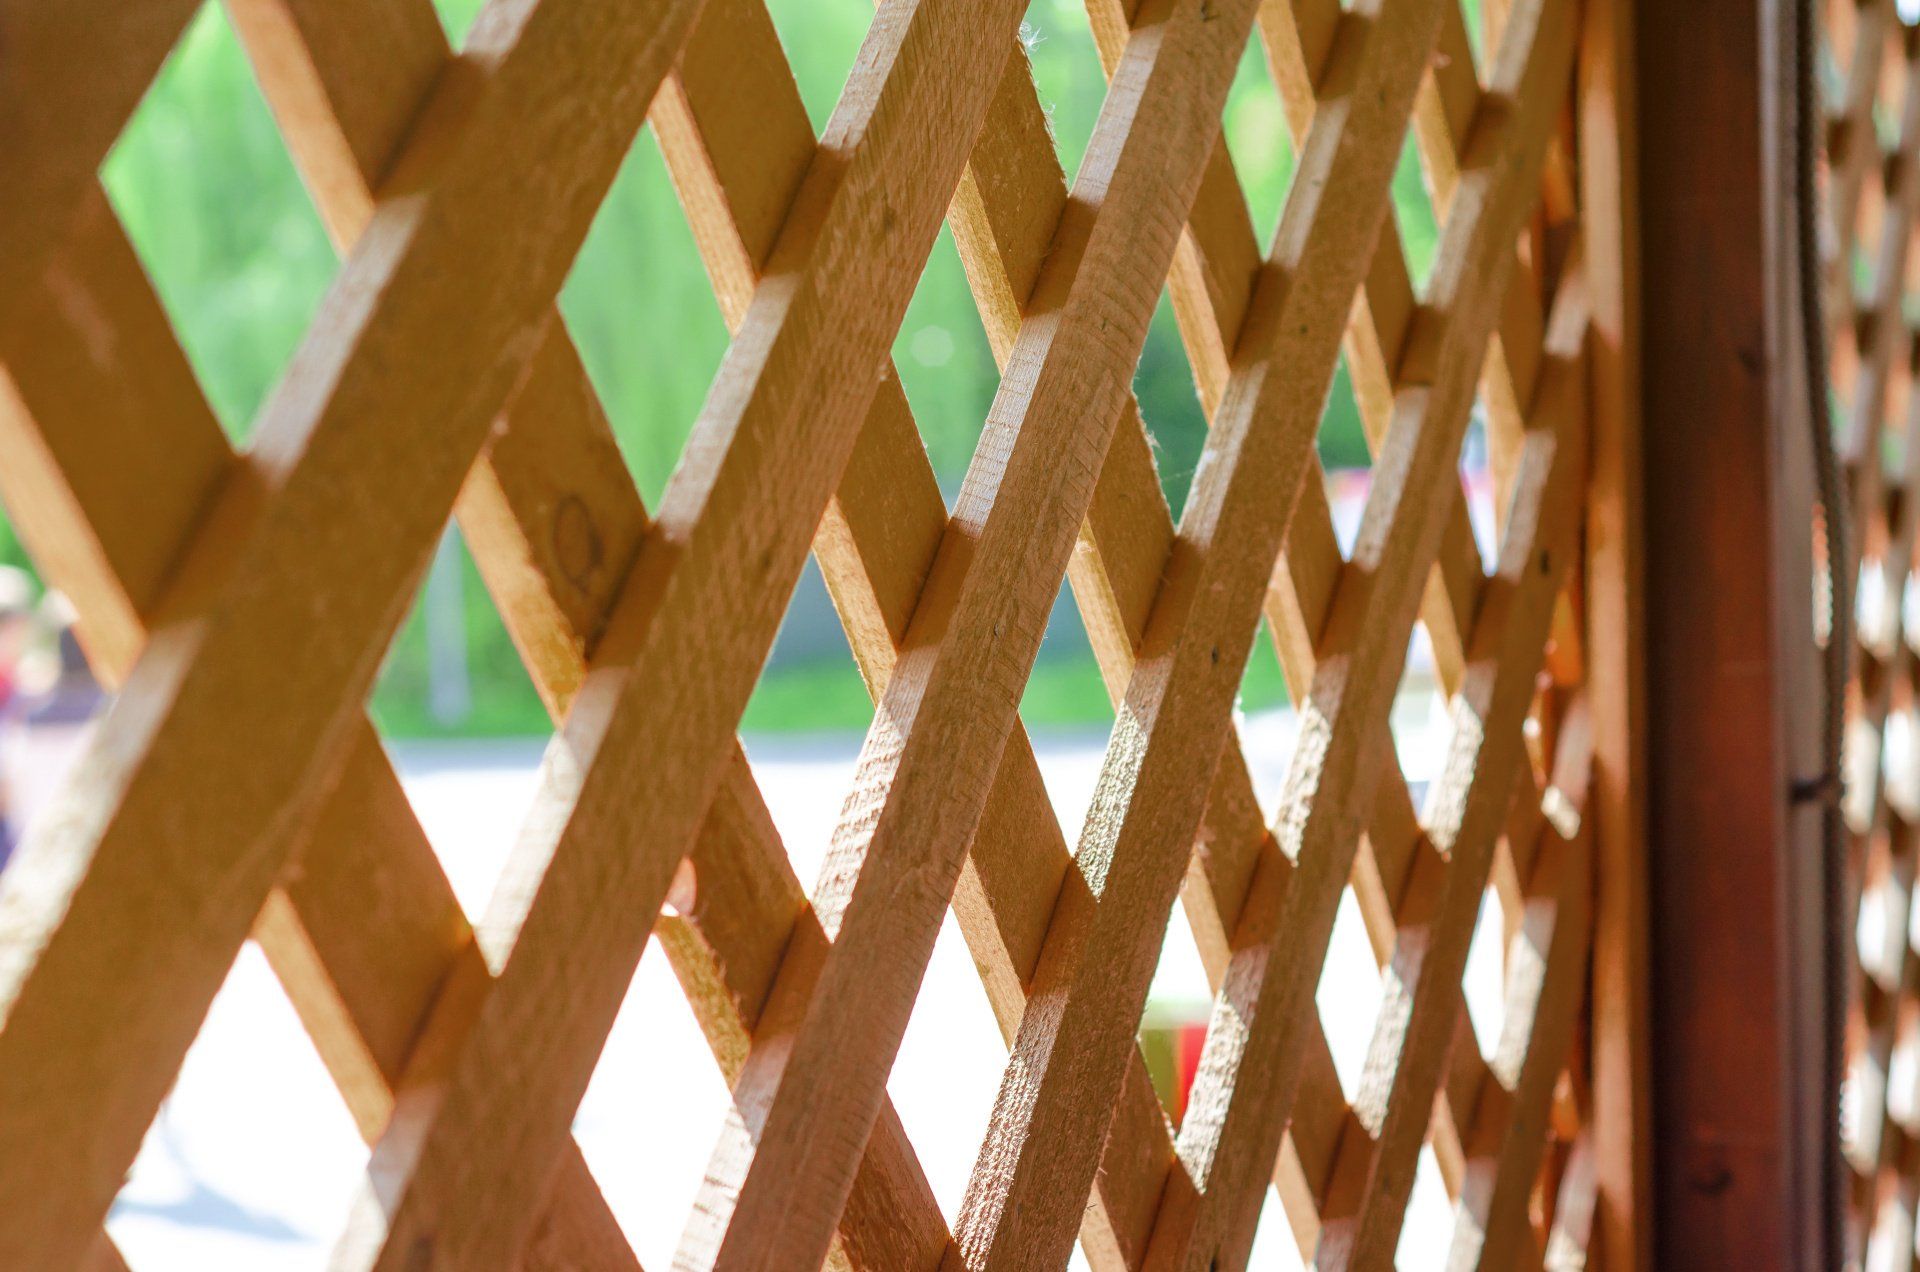 A wood lattice fence surrounding a deck